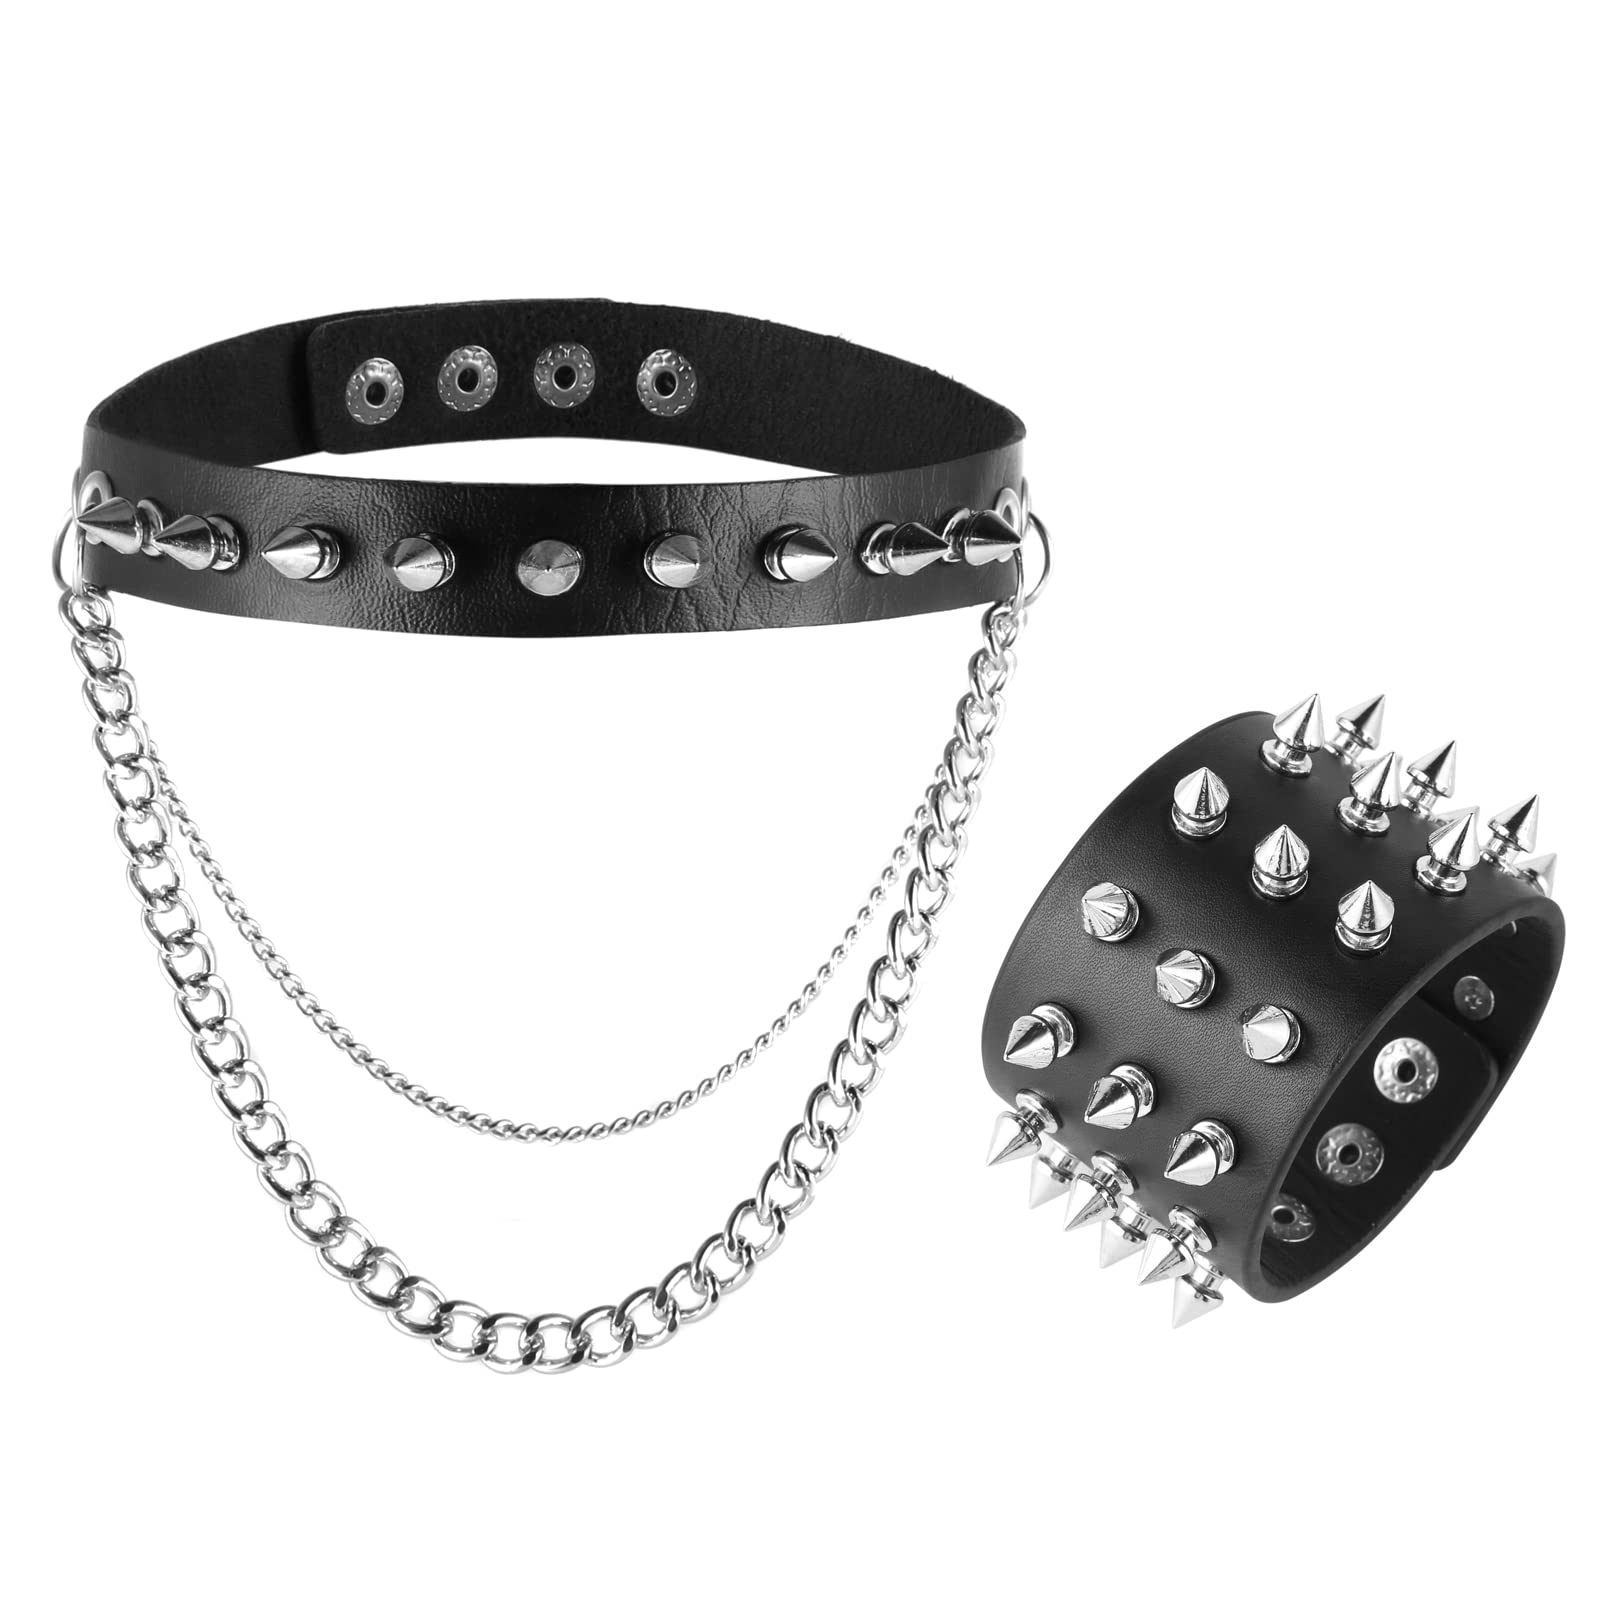 HZMAN Women Men Cool Punk Goth Metal Spike Studded Link Leather Collar Choker Metal 5cm Wide Spike Studded Bracelet Set